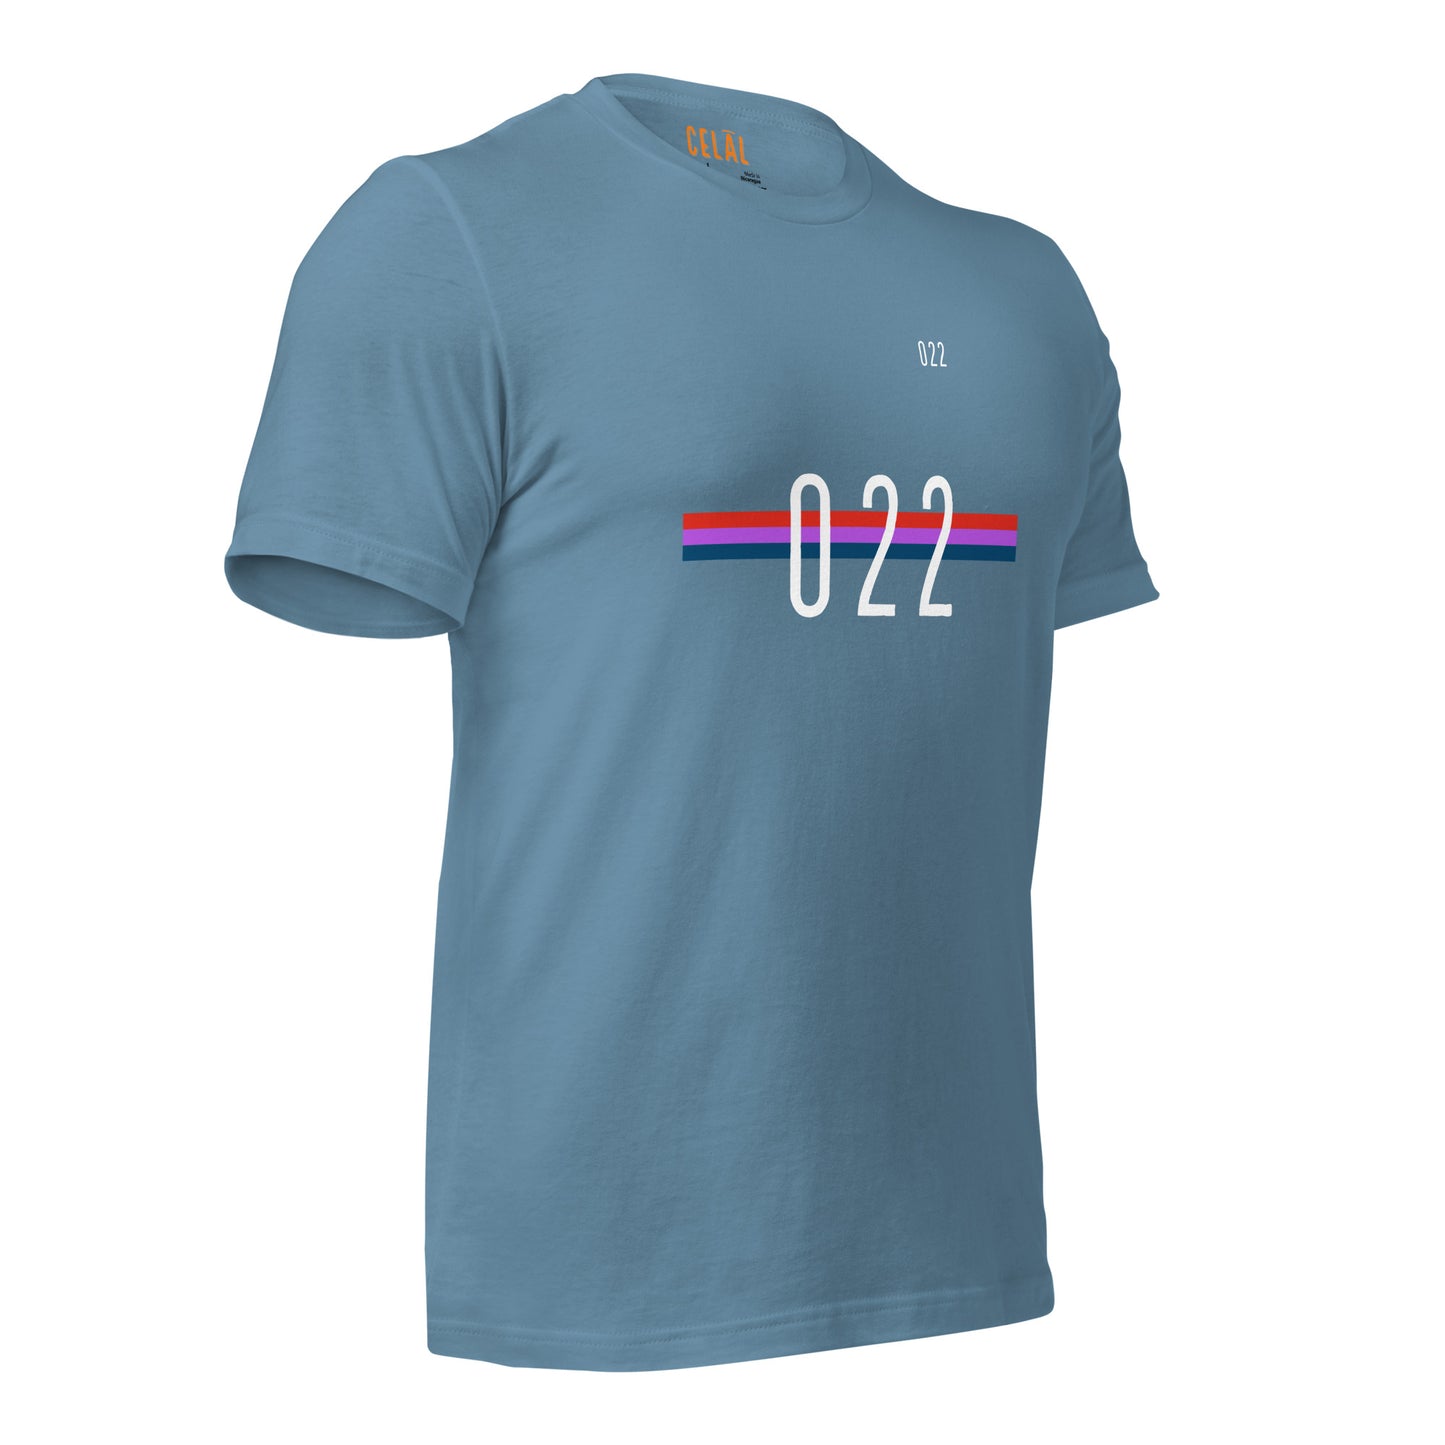 022 Unisex t-shirt